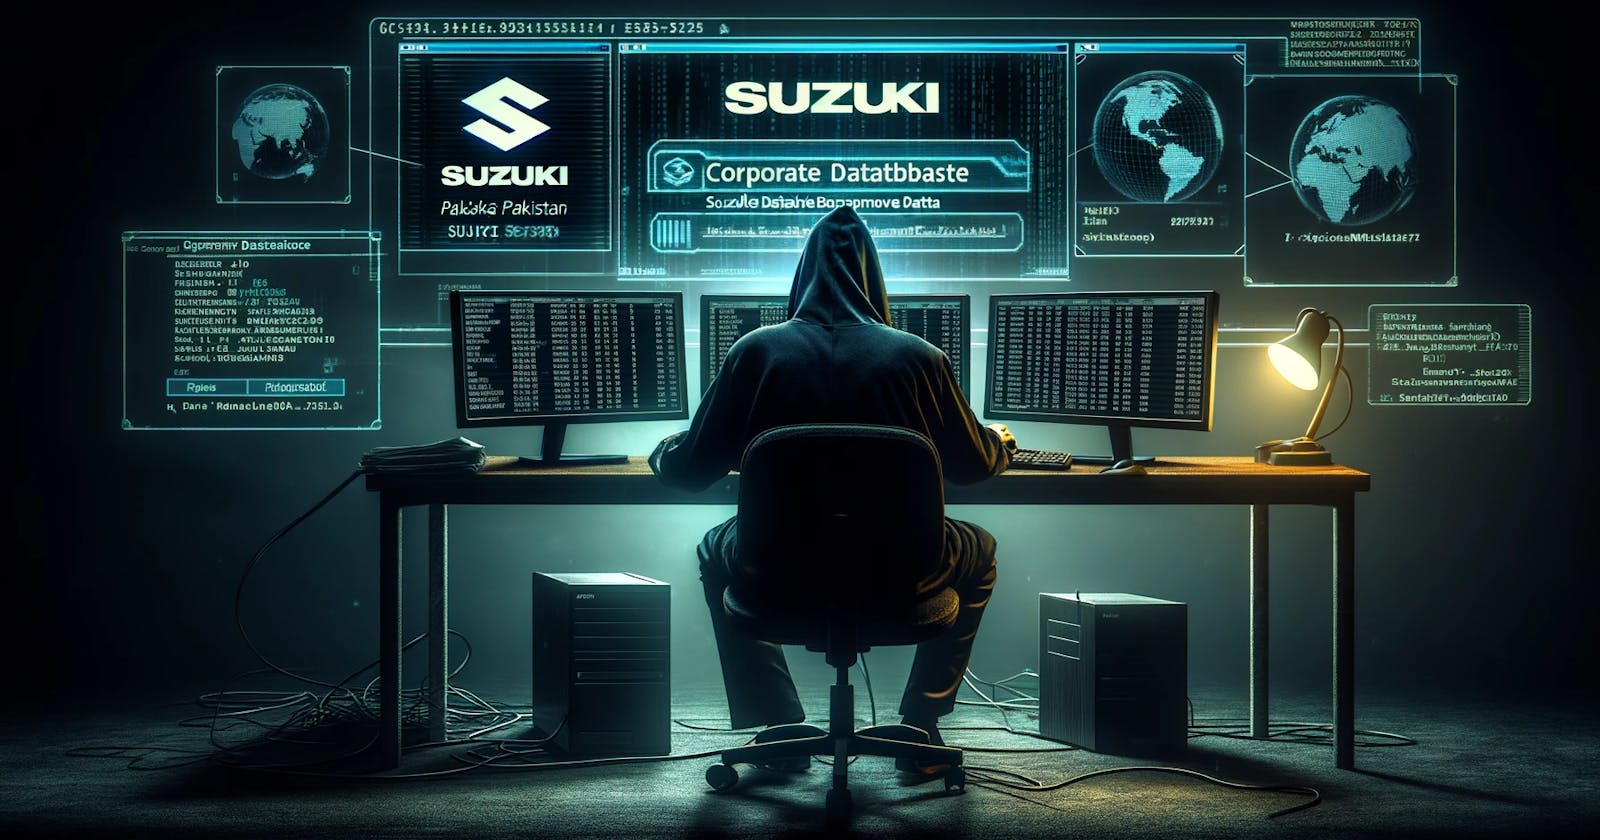 Threat Actor "PreciousMadness" Sells Corporate Database of Suzuki Pakistan